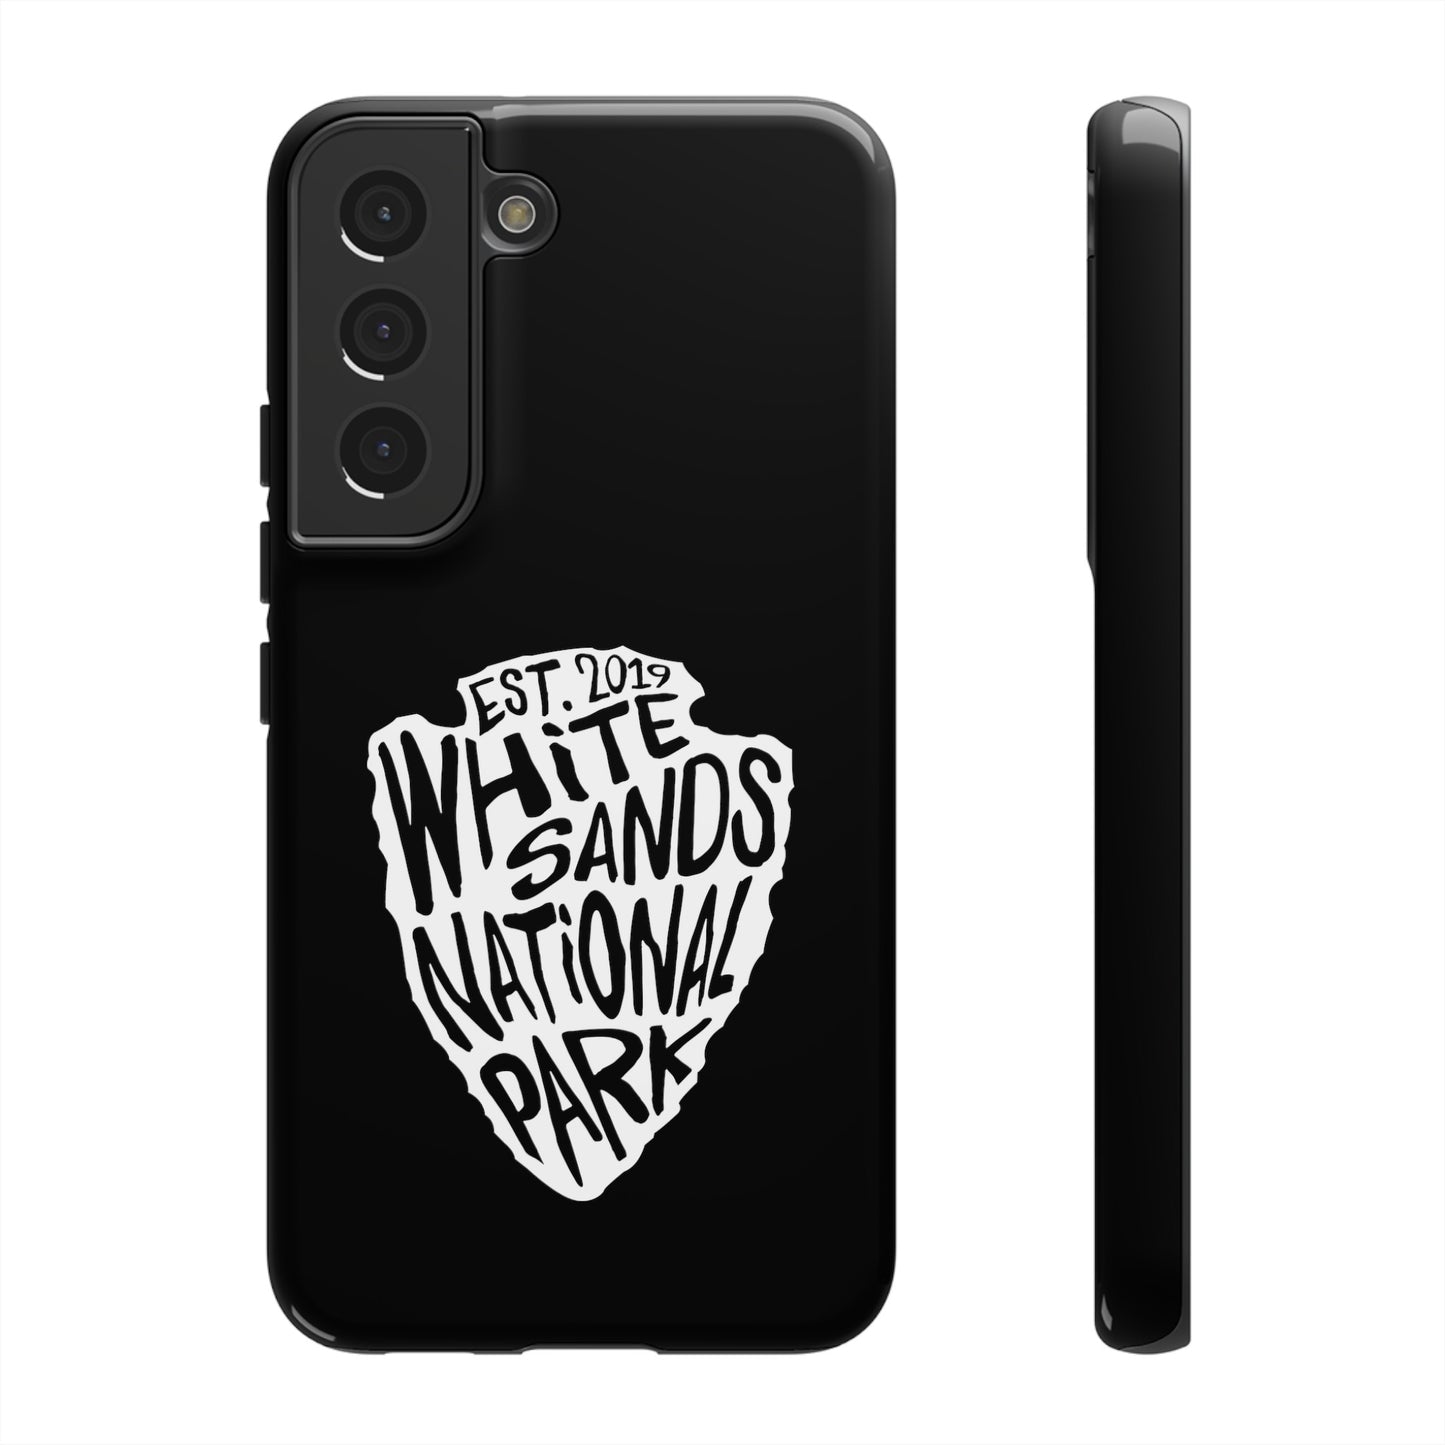 White Sands National Park Phone Case - Arrowhead Design